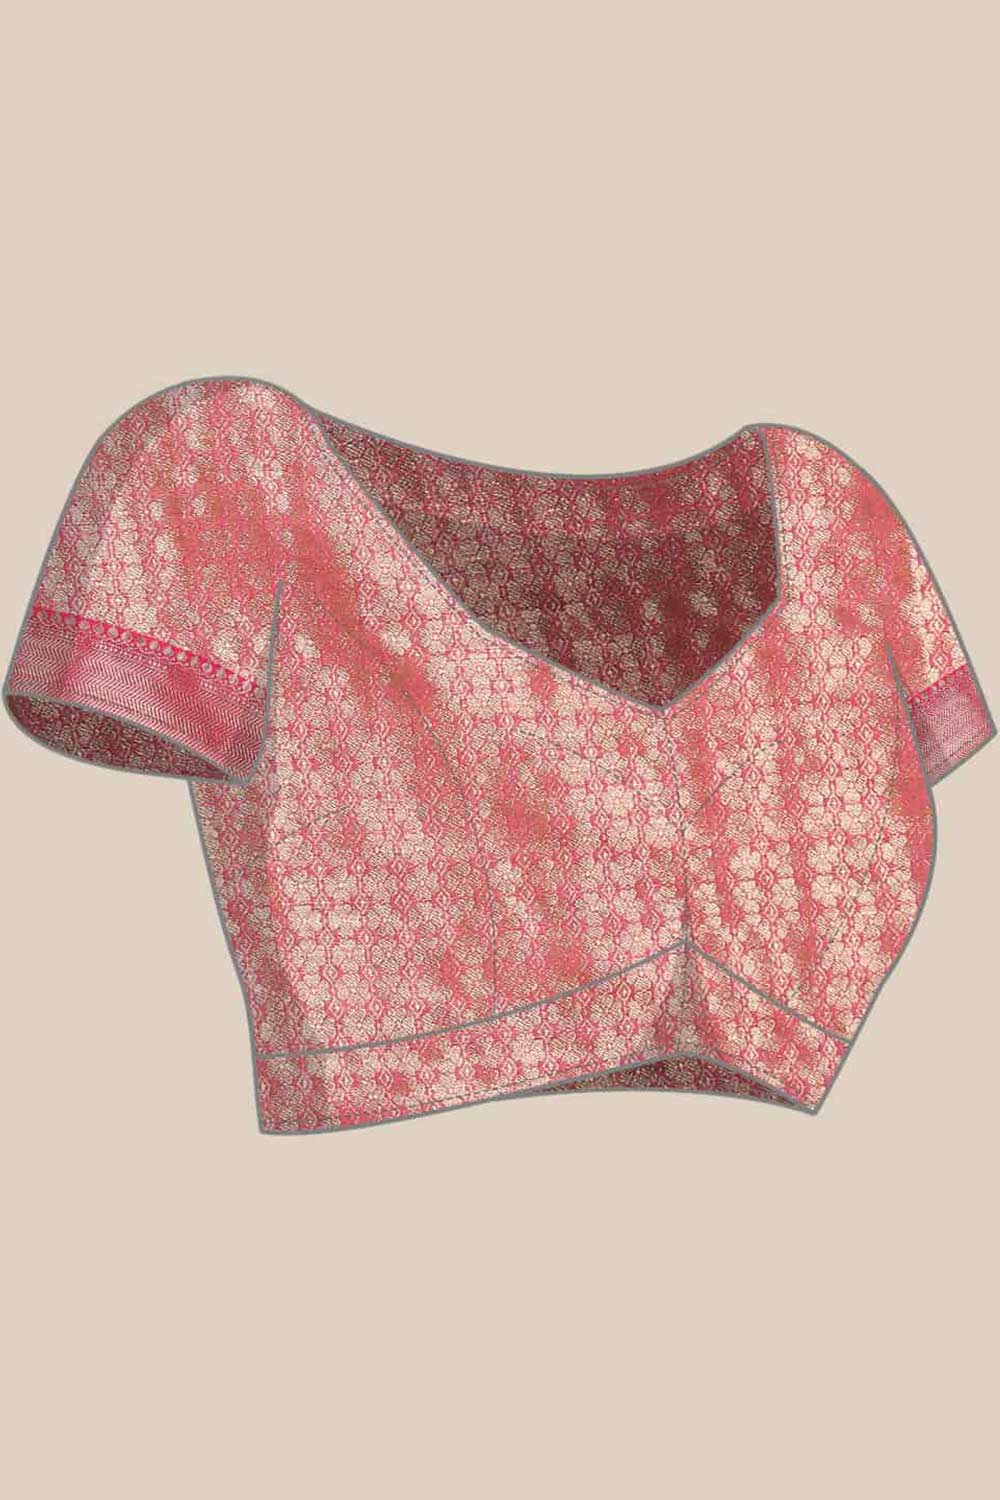 Buy Pink Soft Art Silk Floral Printed Banarasi Saree Online - Side1 